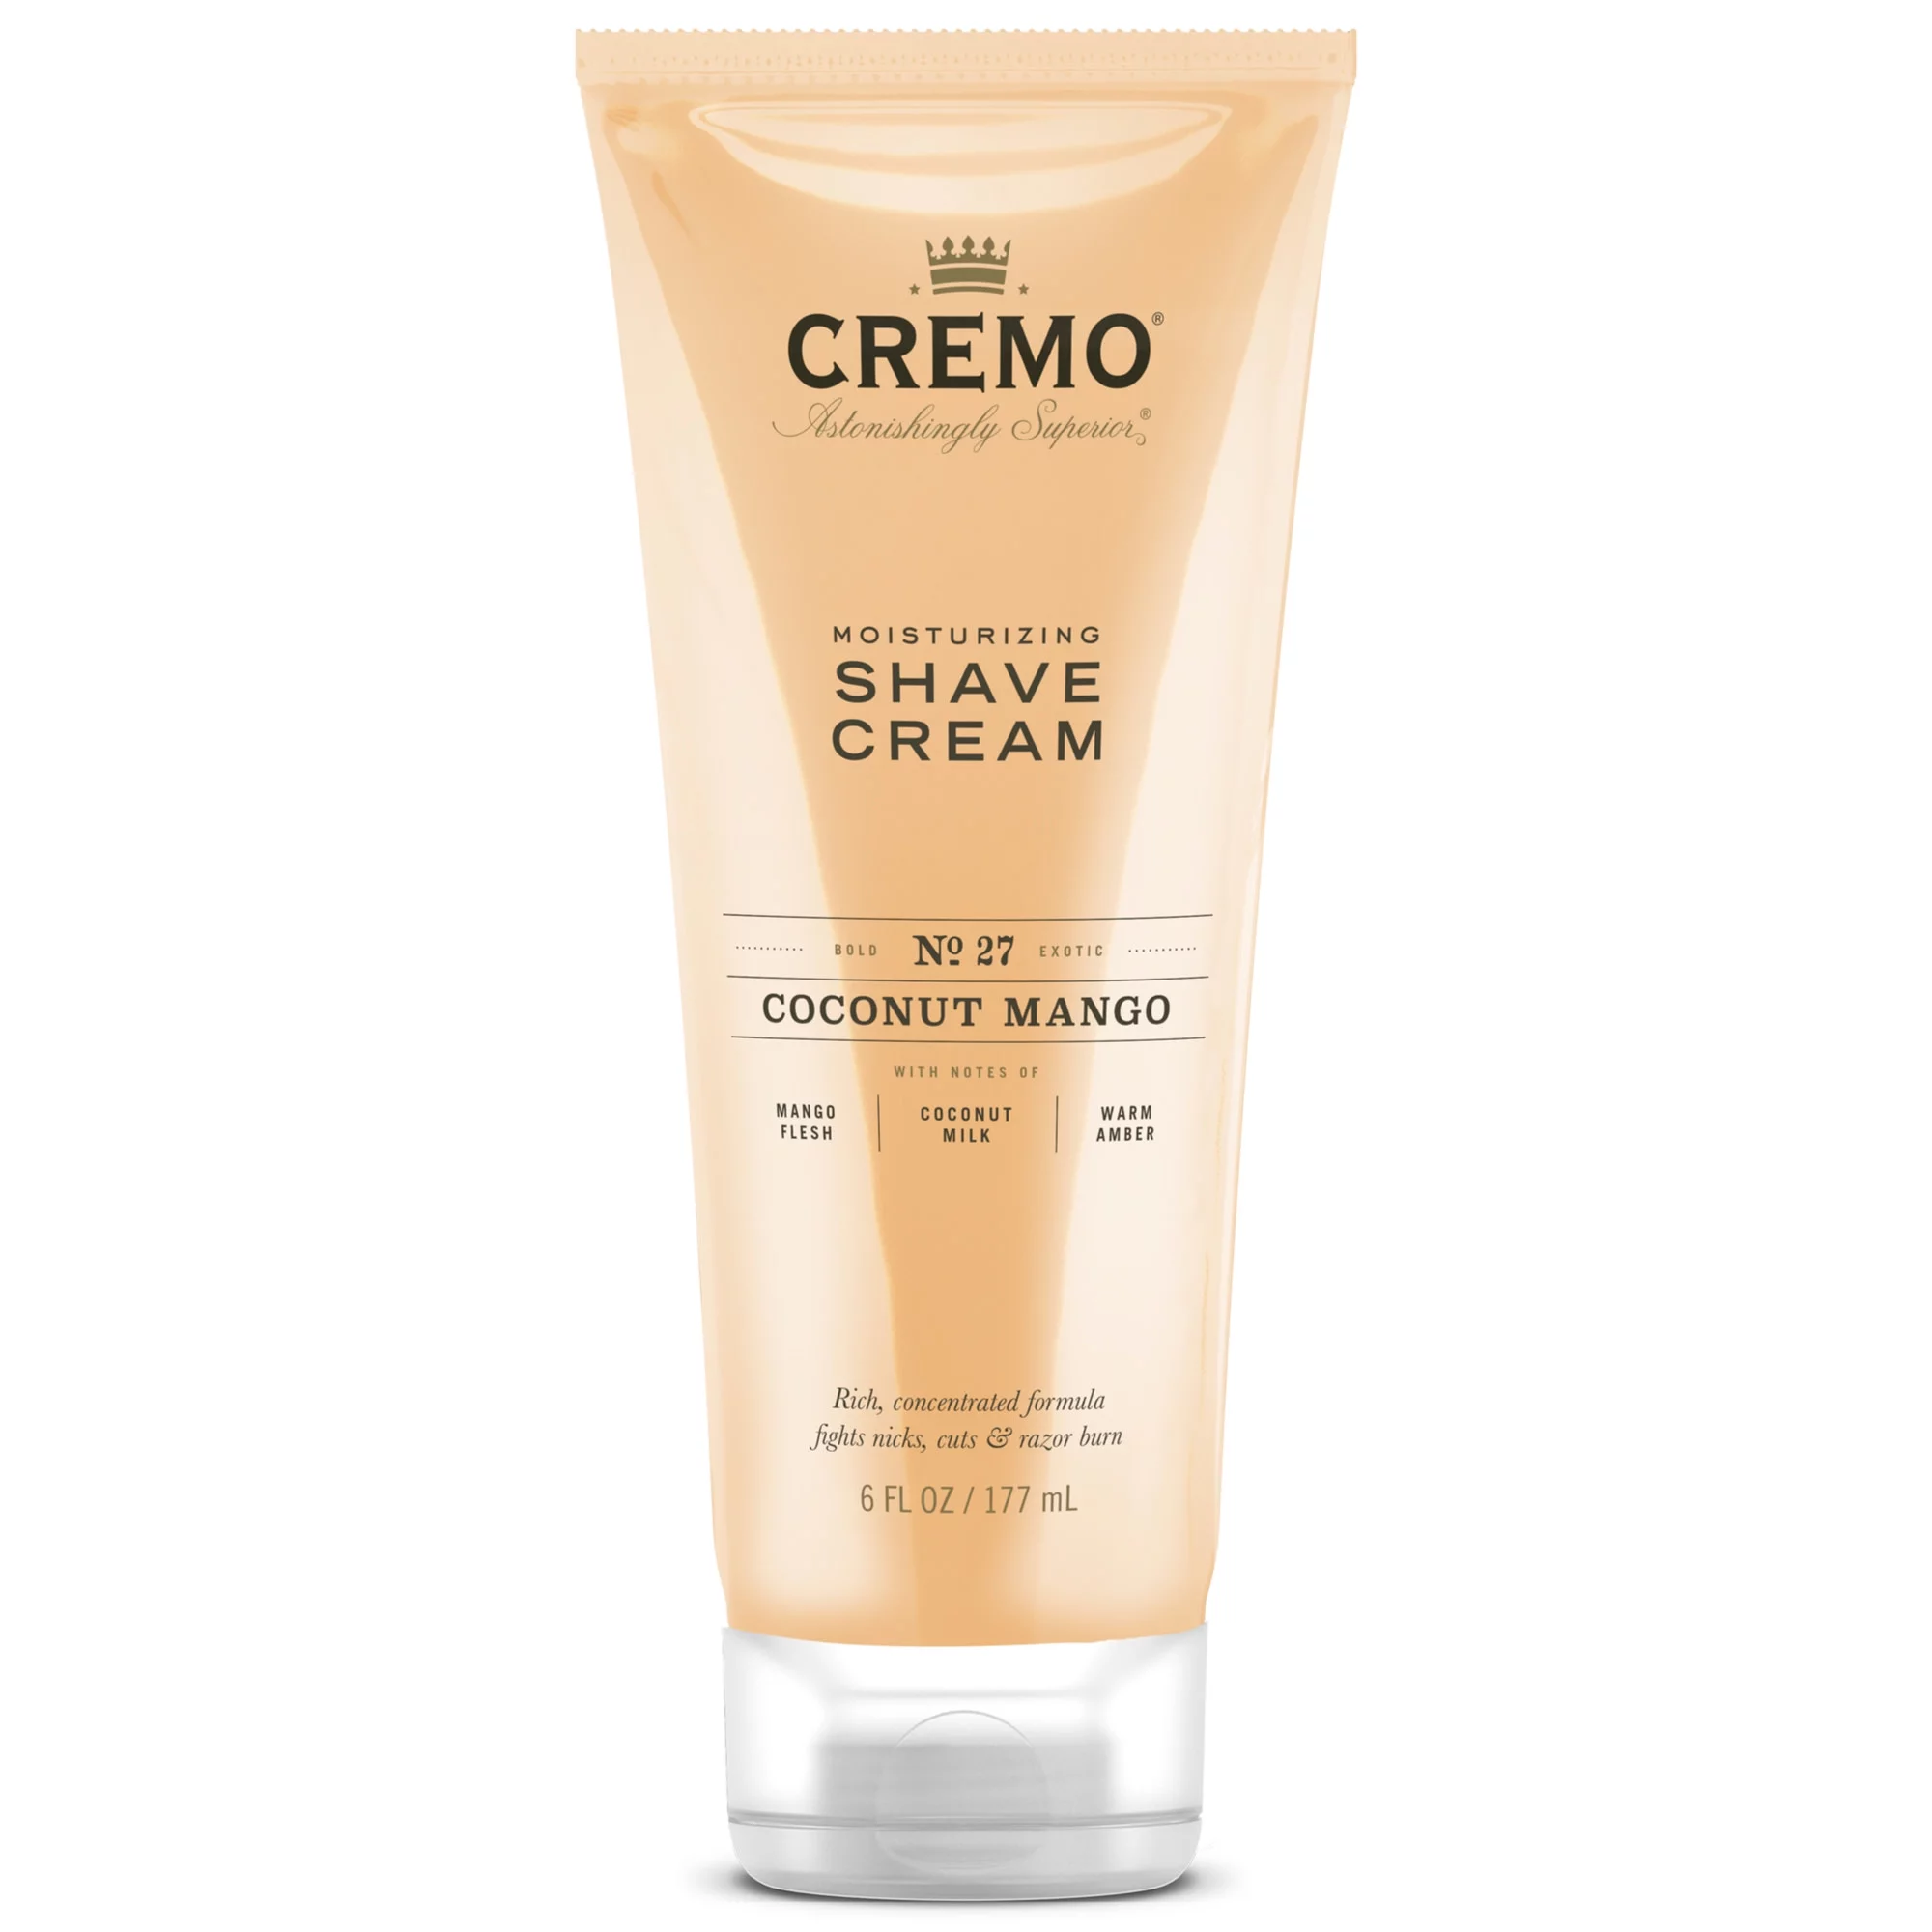 CREMO Astonishingly Superior Coconut Mango Moisturizing Shave Cream, 6 fl oz